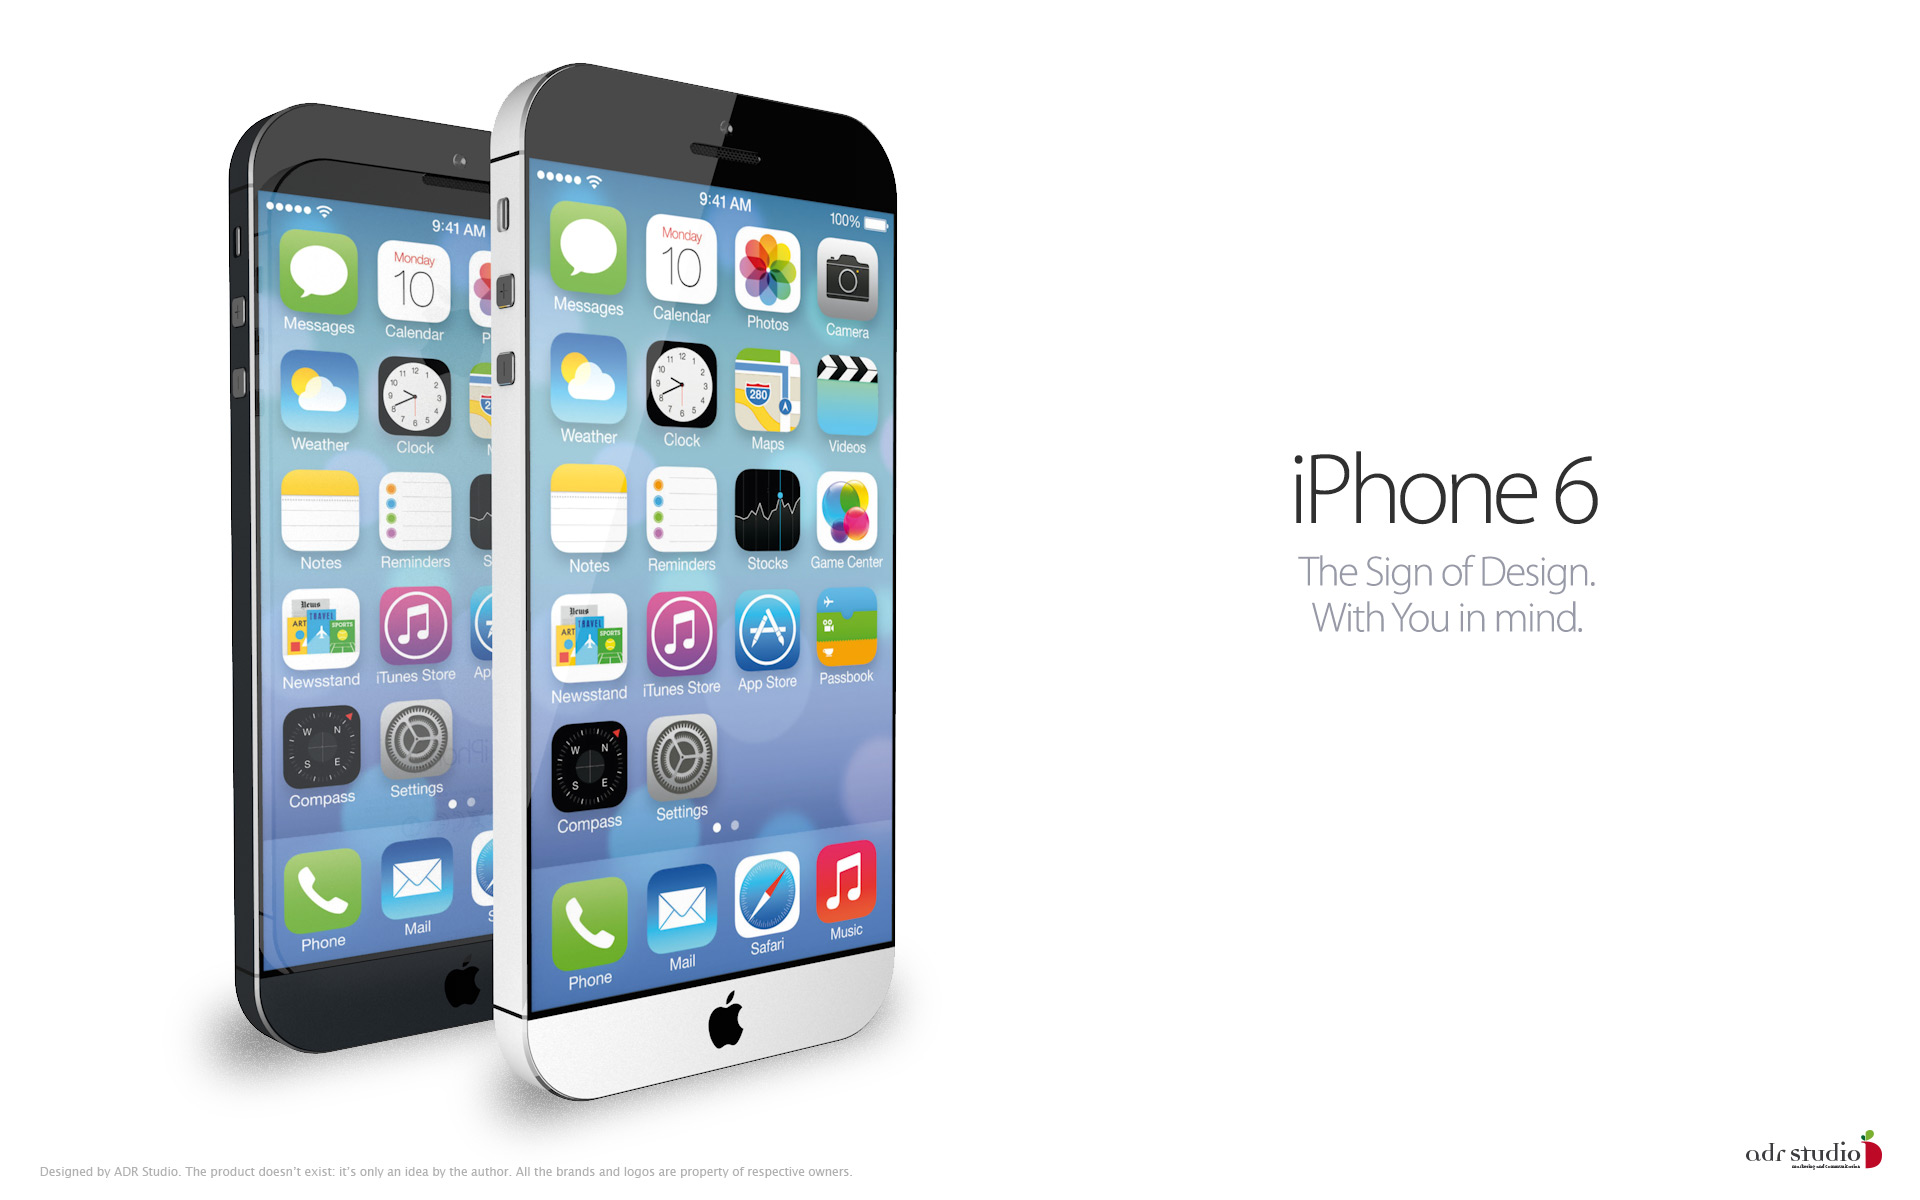 iPhone 6 mit iOS 7 - The Sign of Design! 5